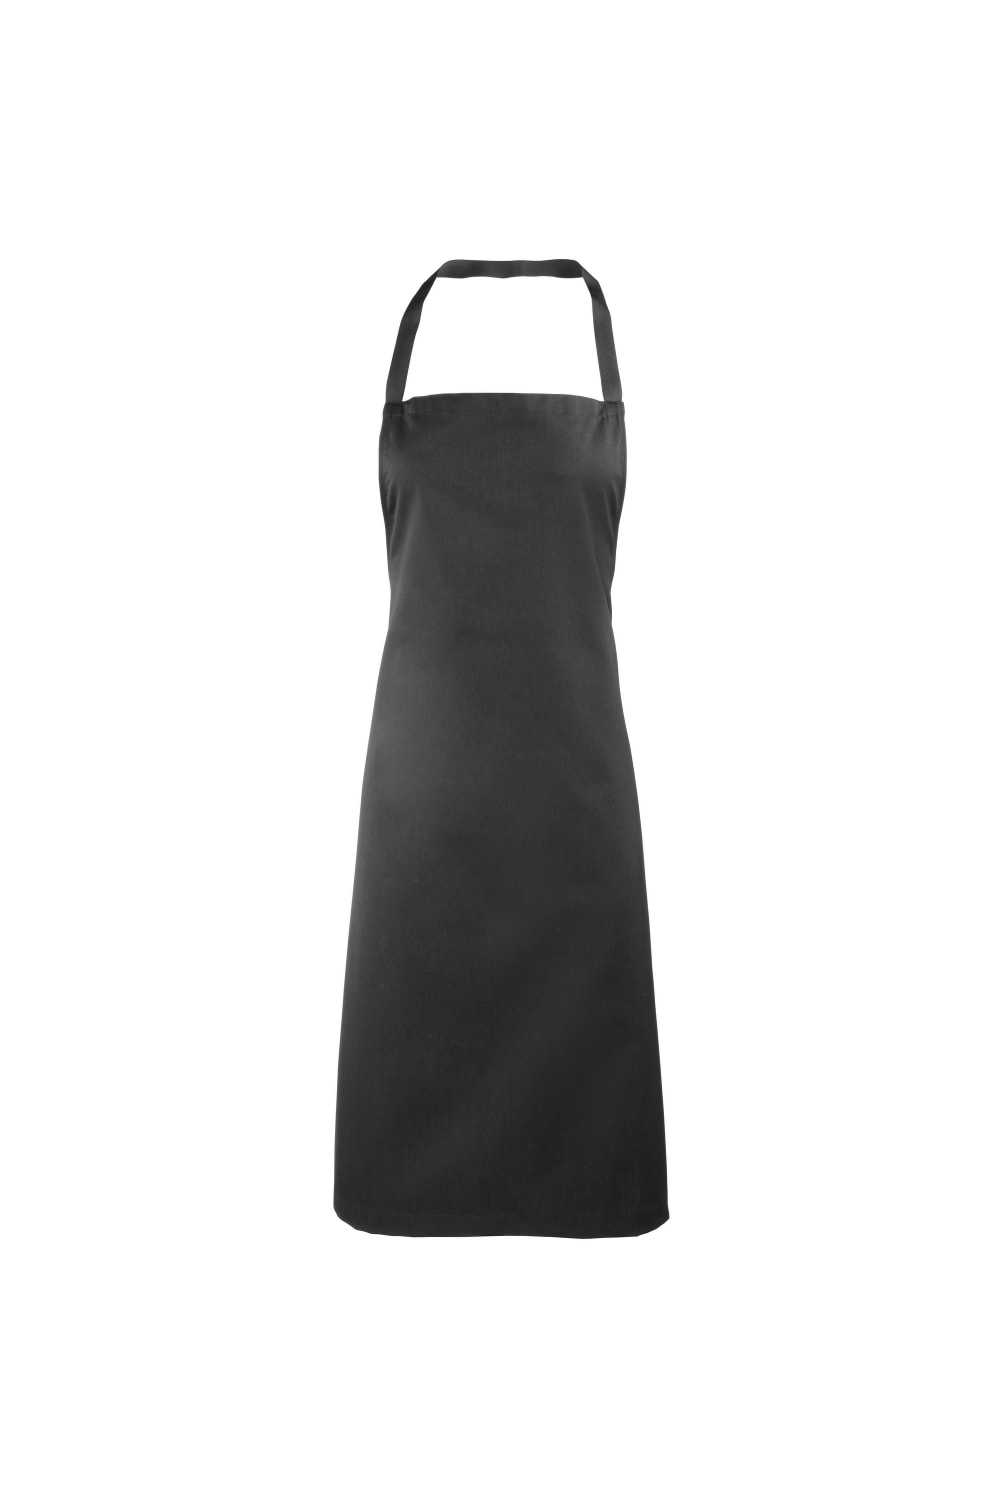 Premier Ladies/Womens Apron (no Pocket) / Workwear (Pack of 2) (Black) (One Size)